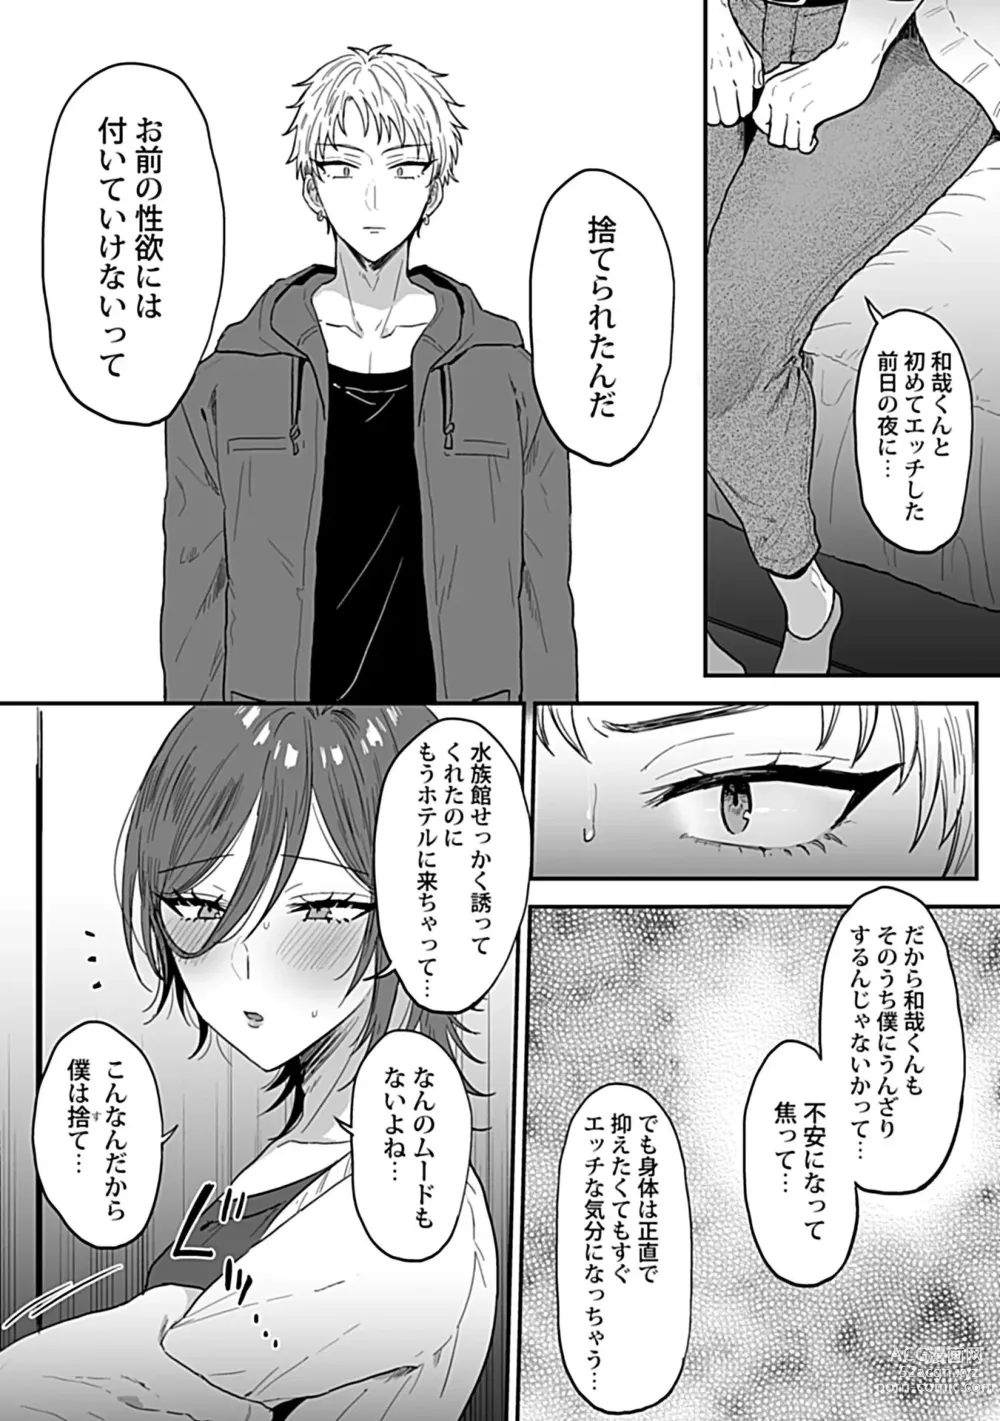 Page 16 of manga Tonari no Ecchi na Onii-san. 2 [R18 Ban] - The sexy boy who lives in the next!